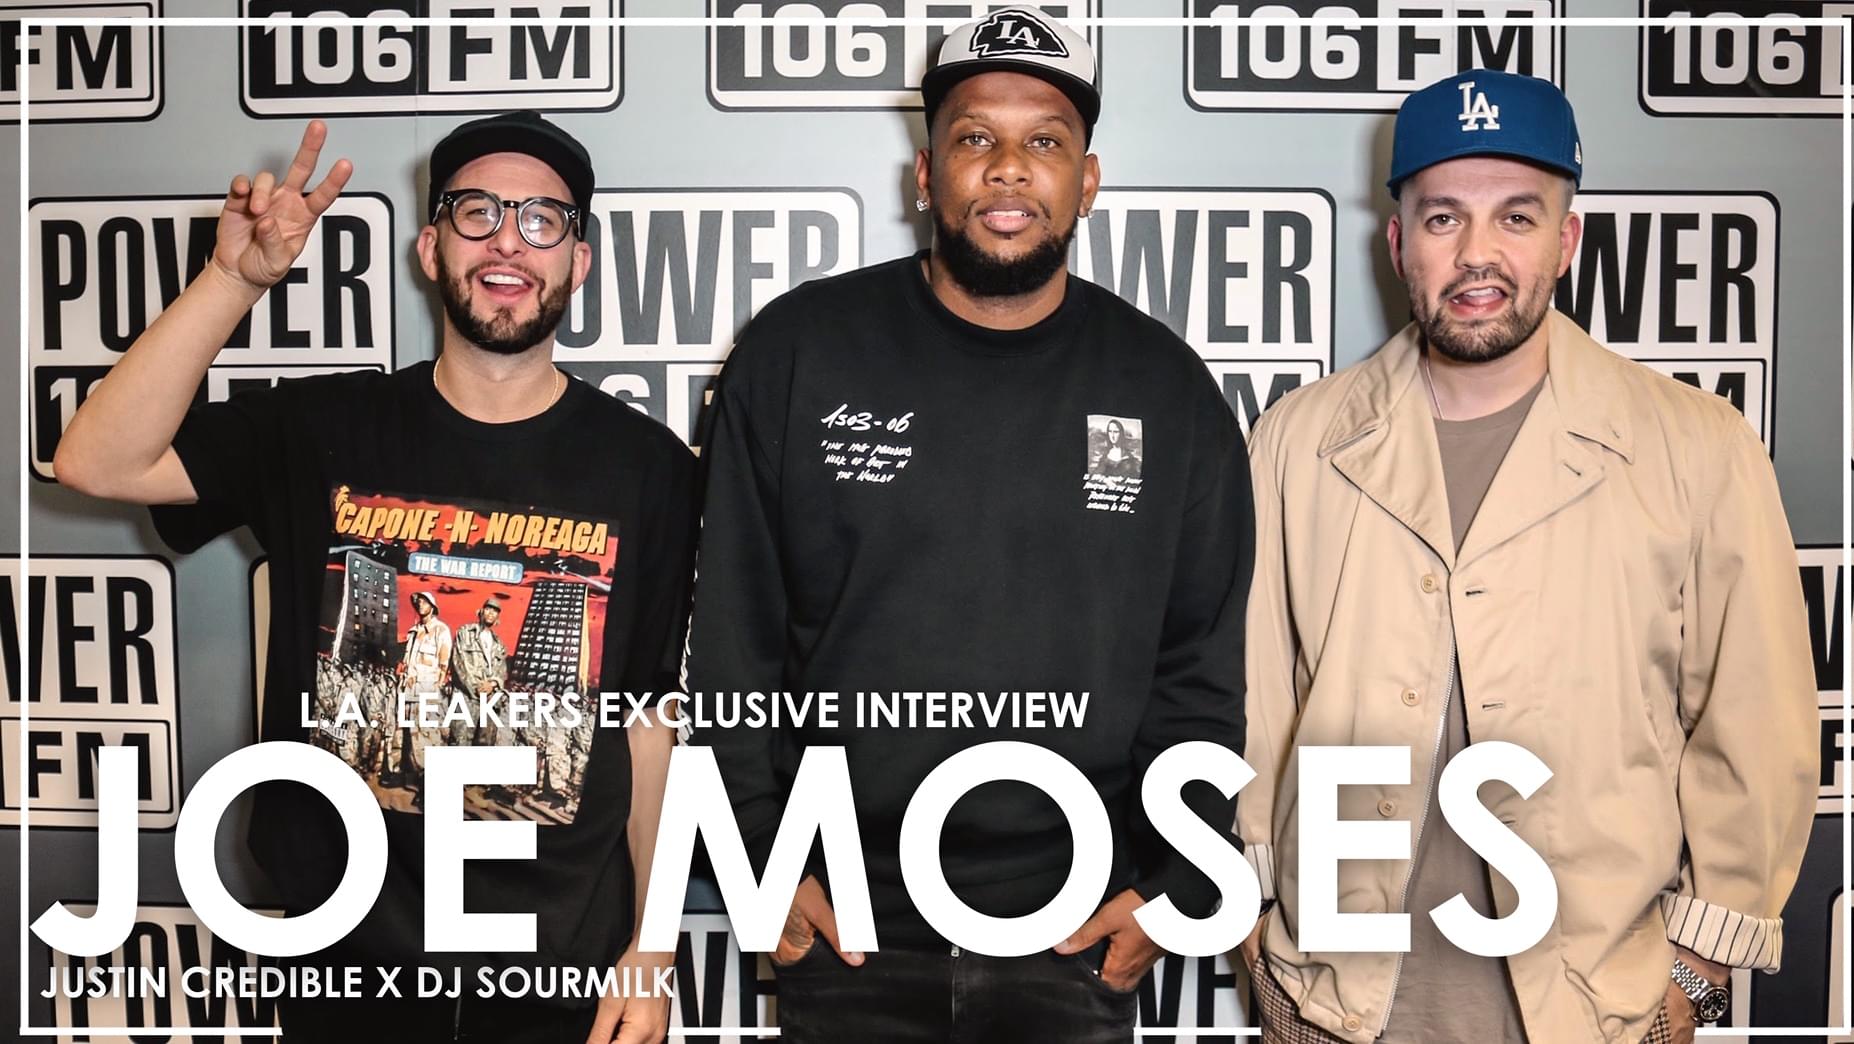 Joe Moses Talks ‘Westside’ Album, Relationship With Future + Opinion On Popeye’s Chicken Sandwich [WATCH]